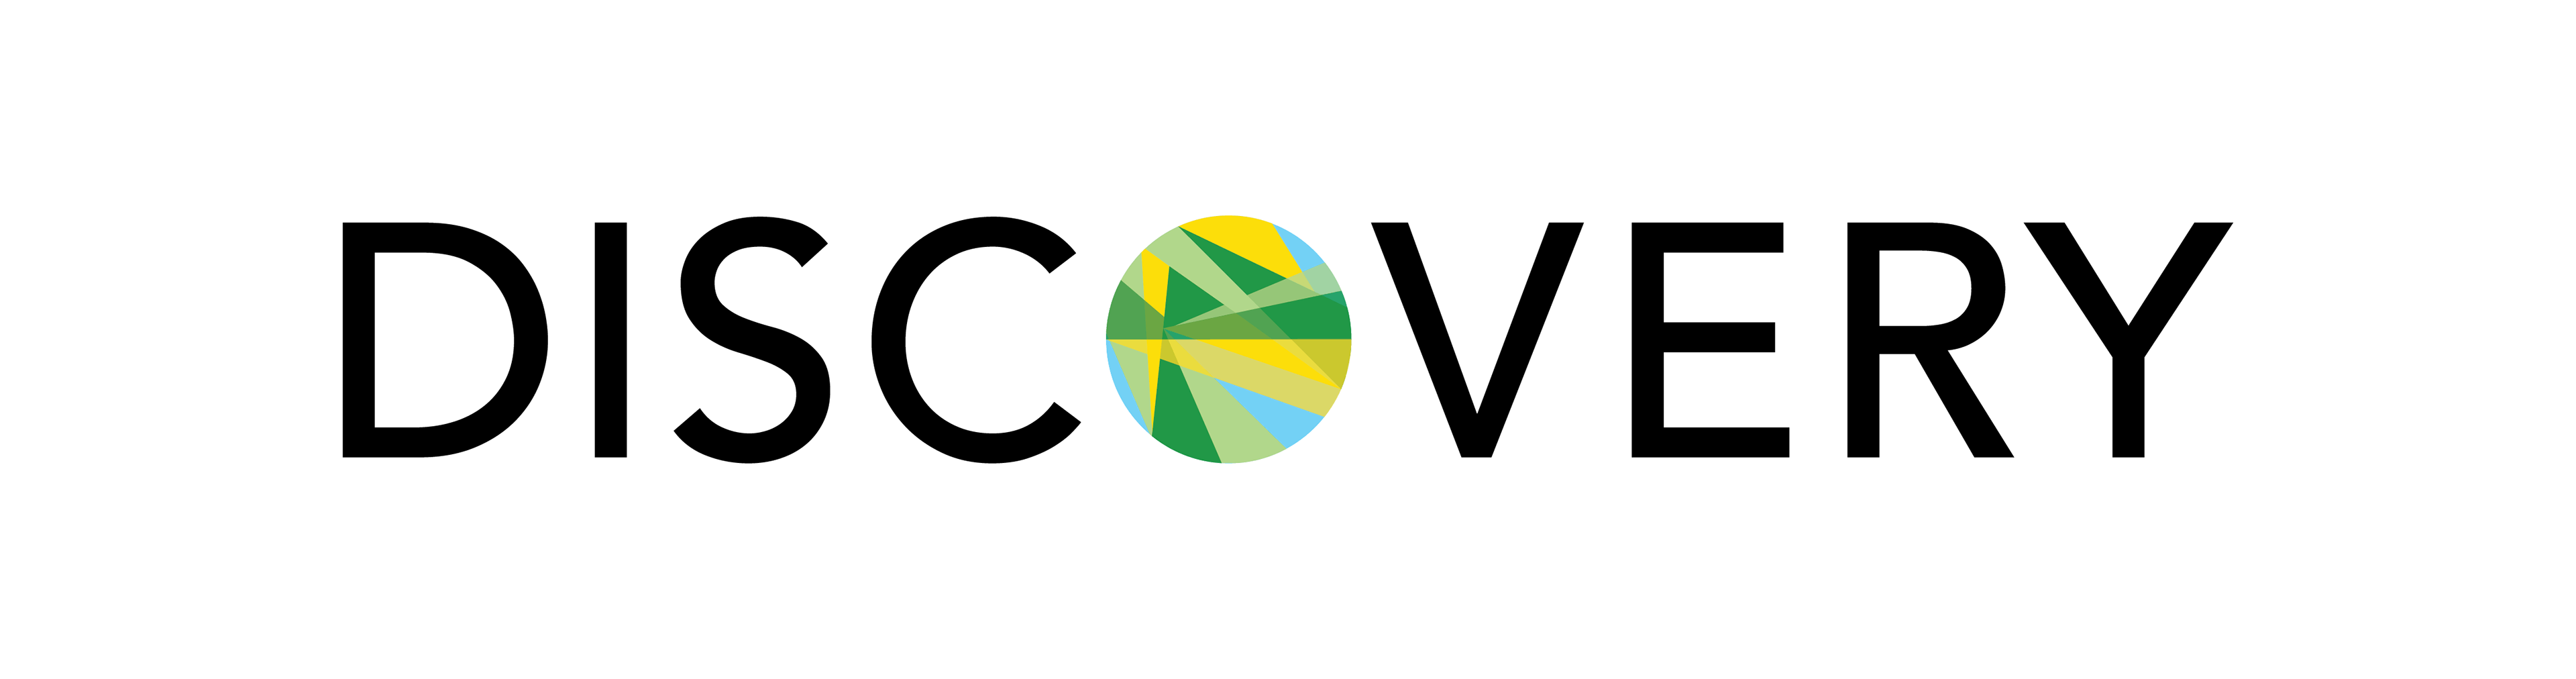 Discovery Communications Logo - Lexie Craig Communications: Logo Design